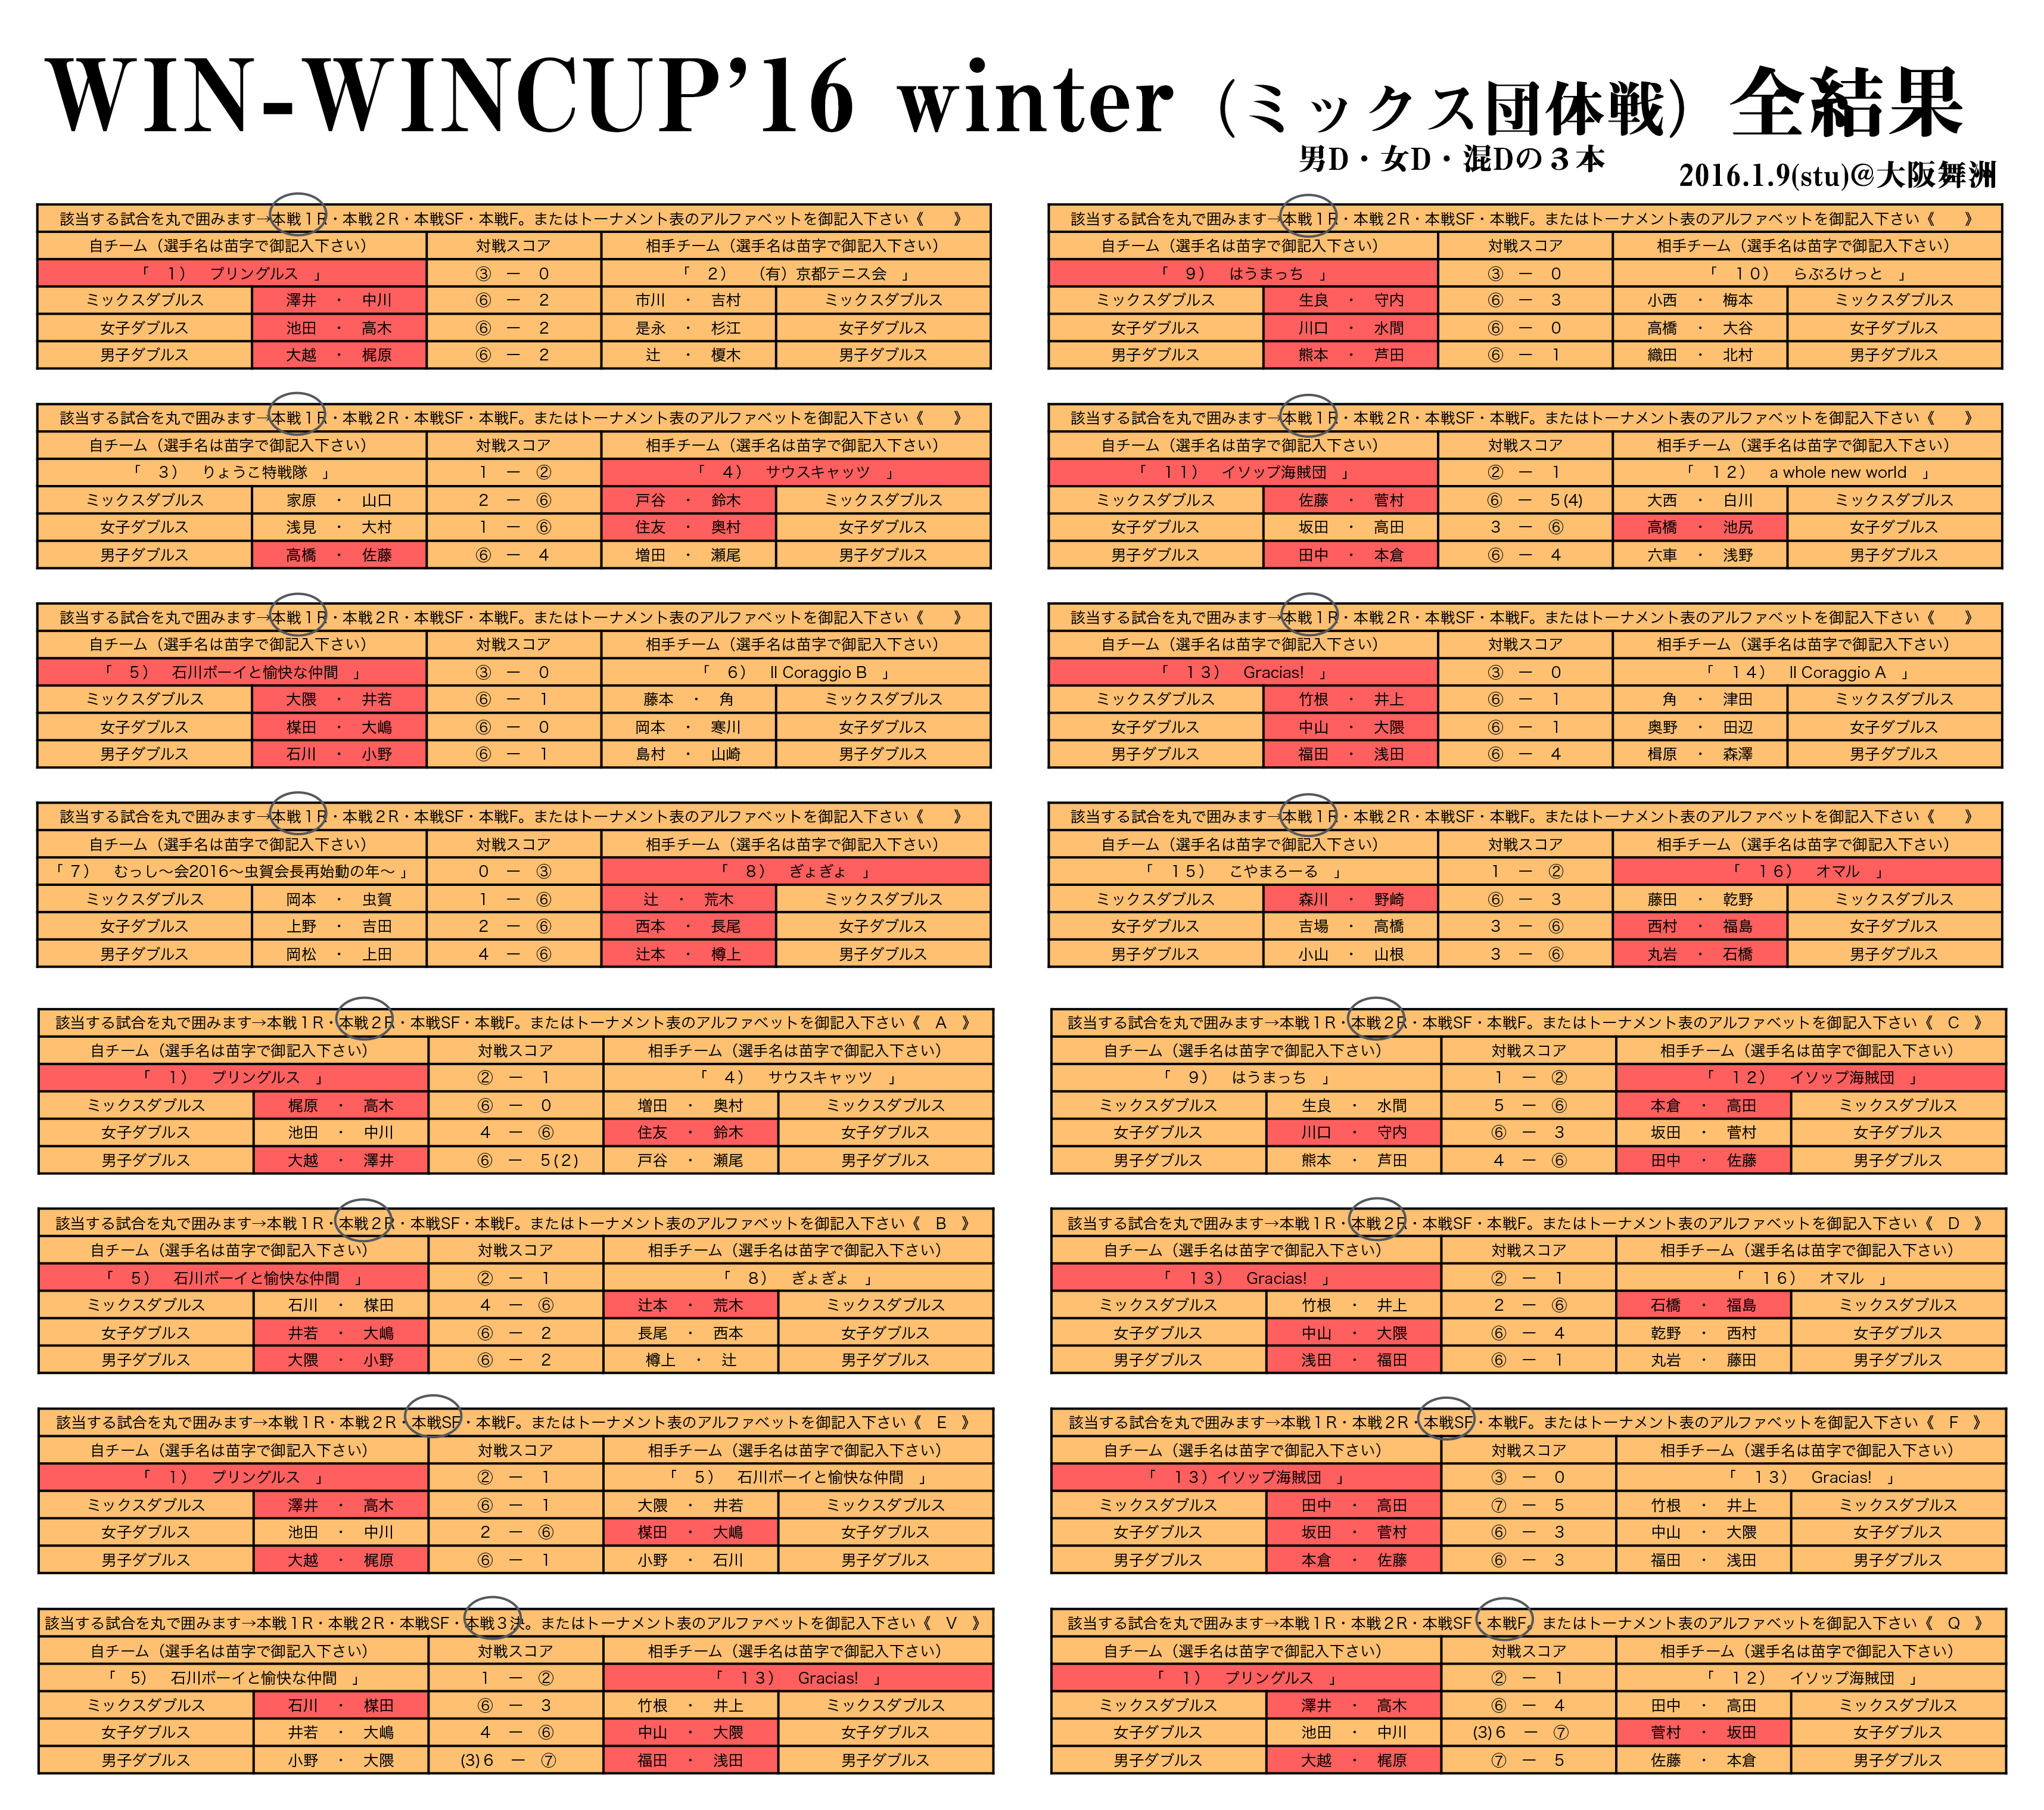 WIN-WINCUP'16 winter全結果①